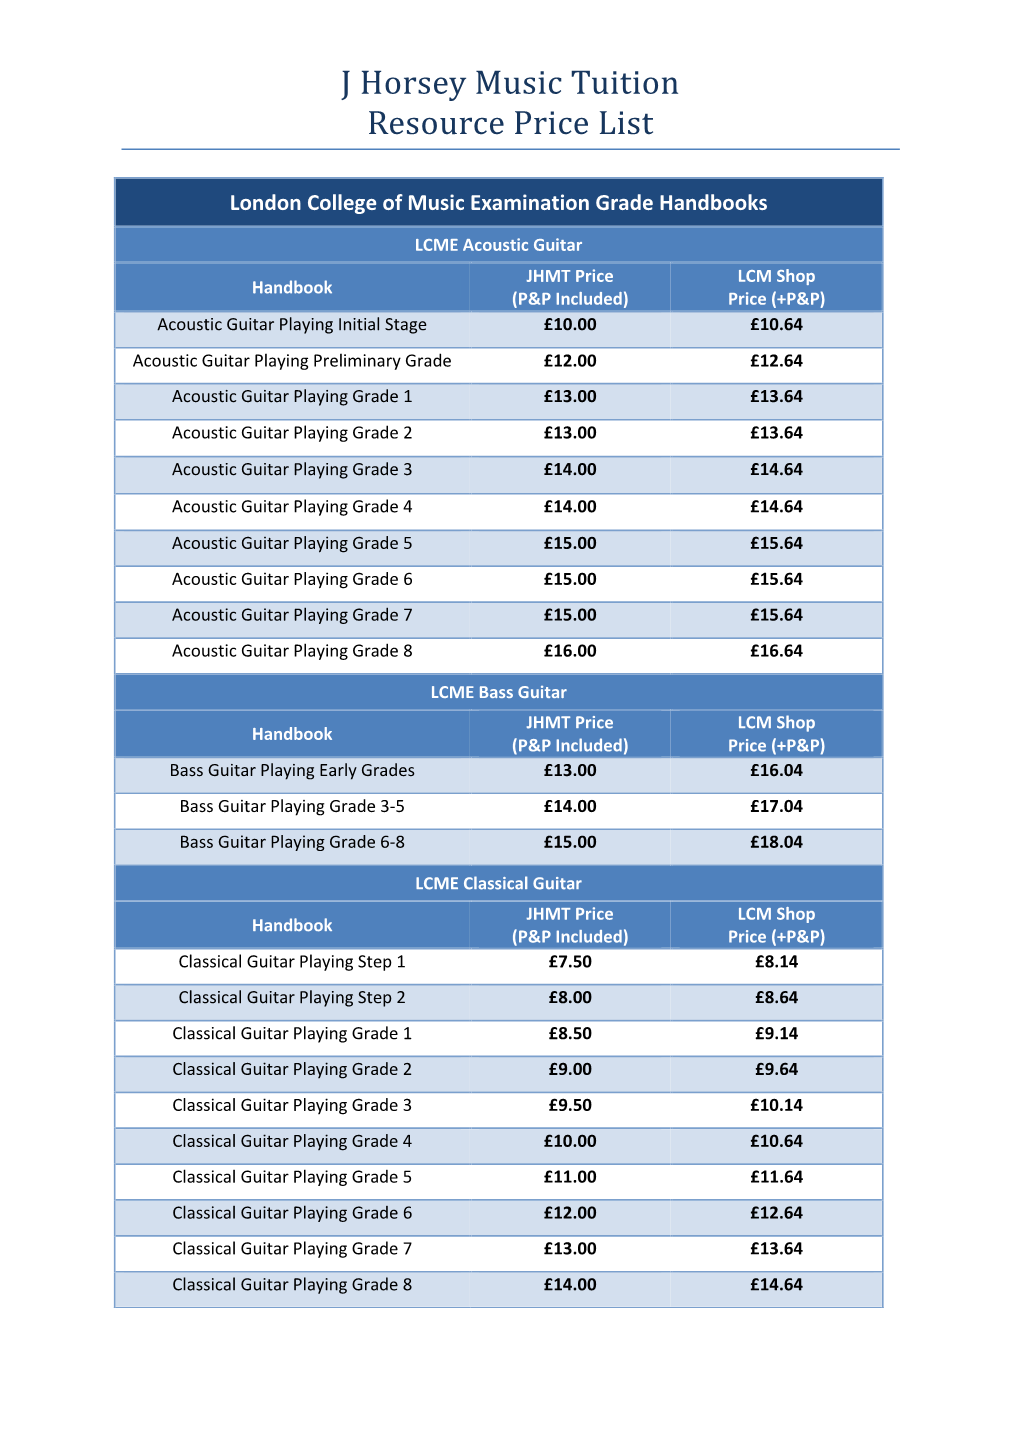 J Horsey Music Tuition Resource Price List